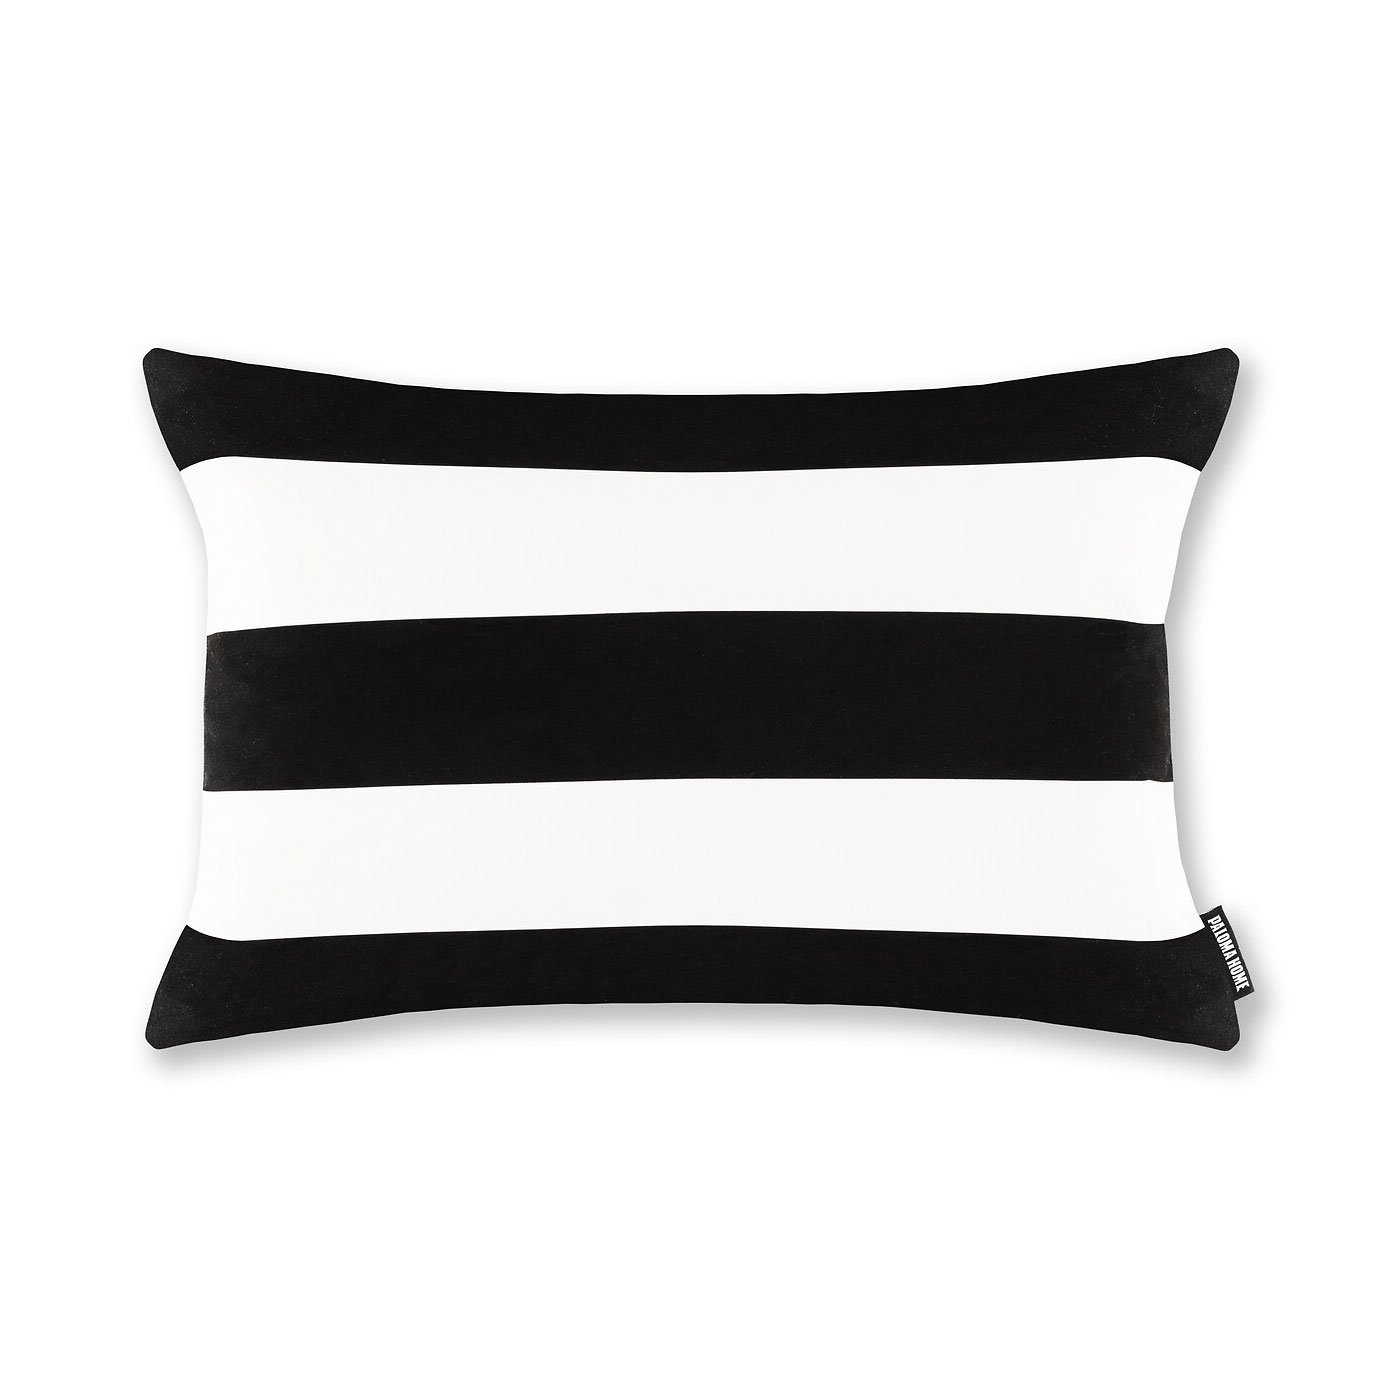 La Redoute - Monochrome Stripe Filled Cushion 40x60cm